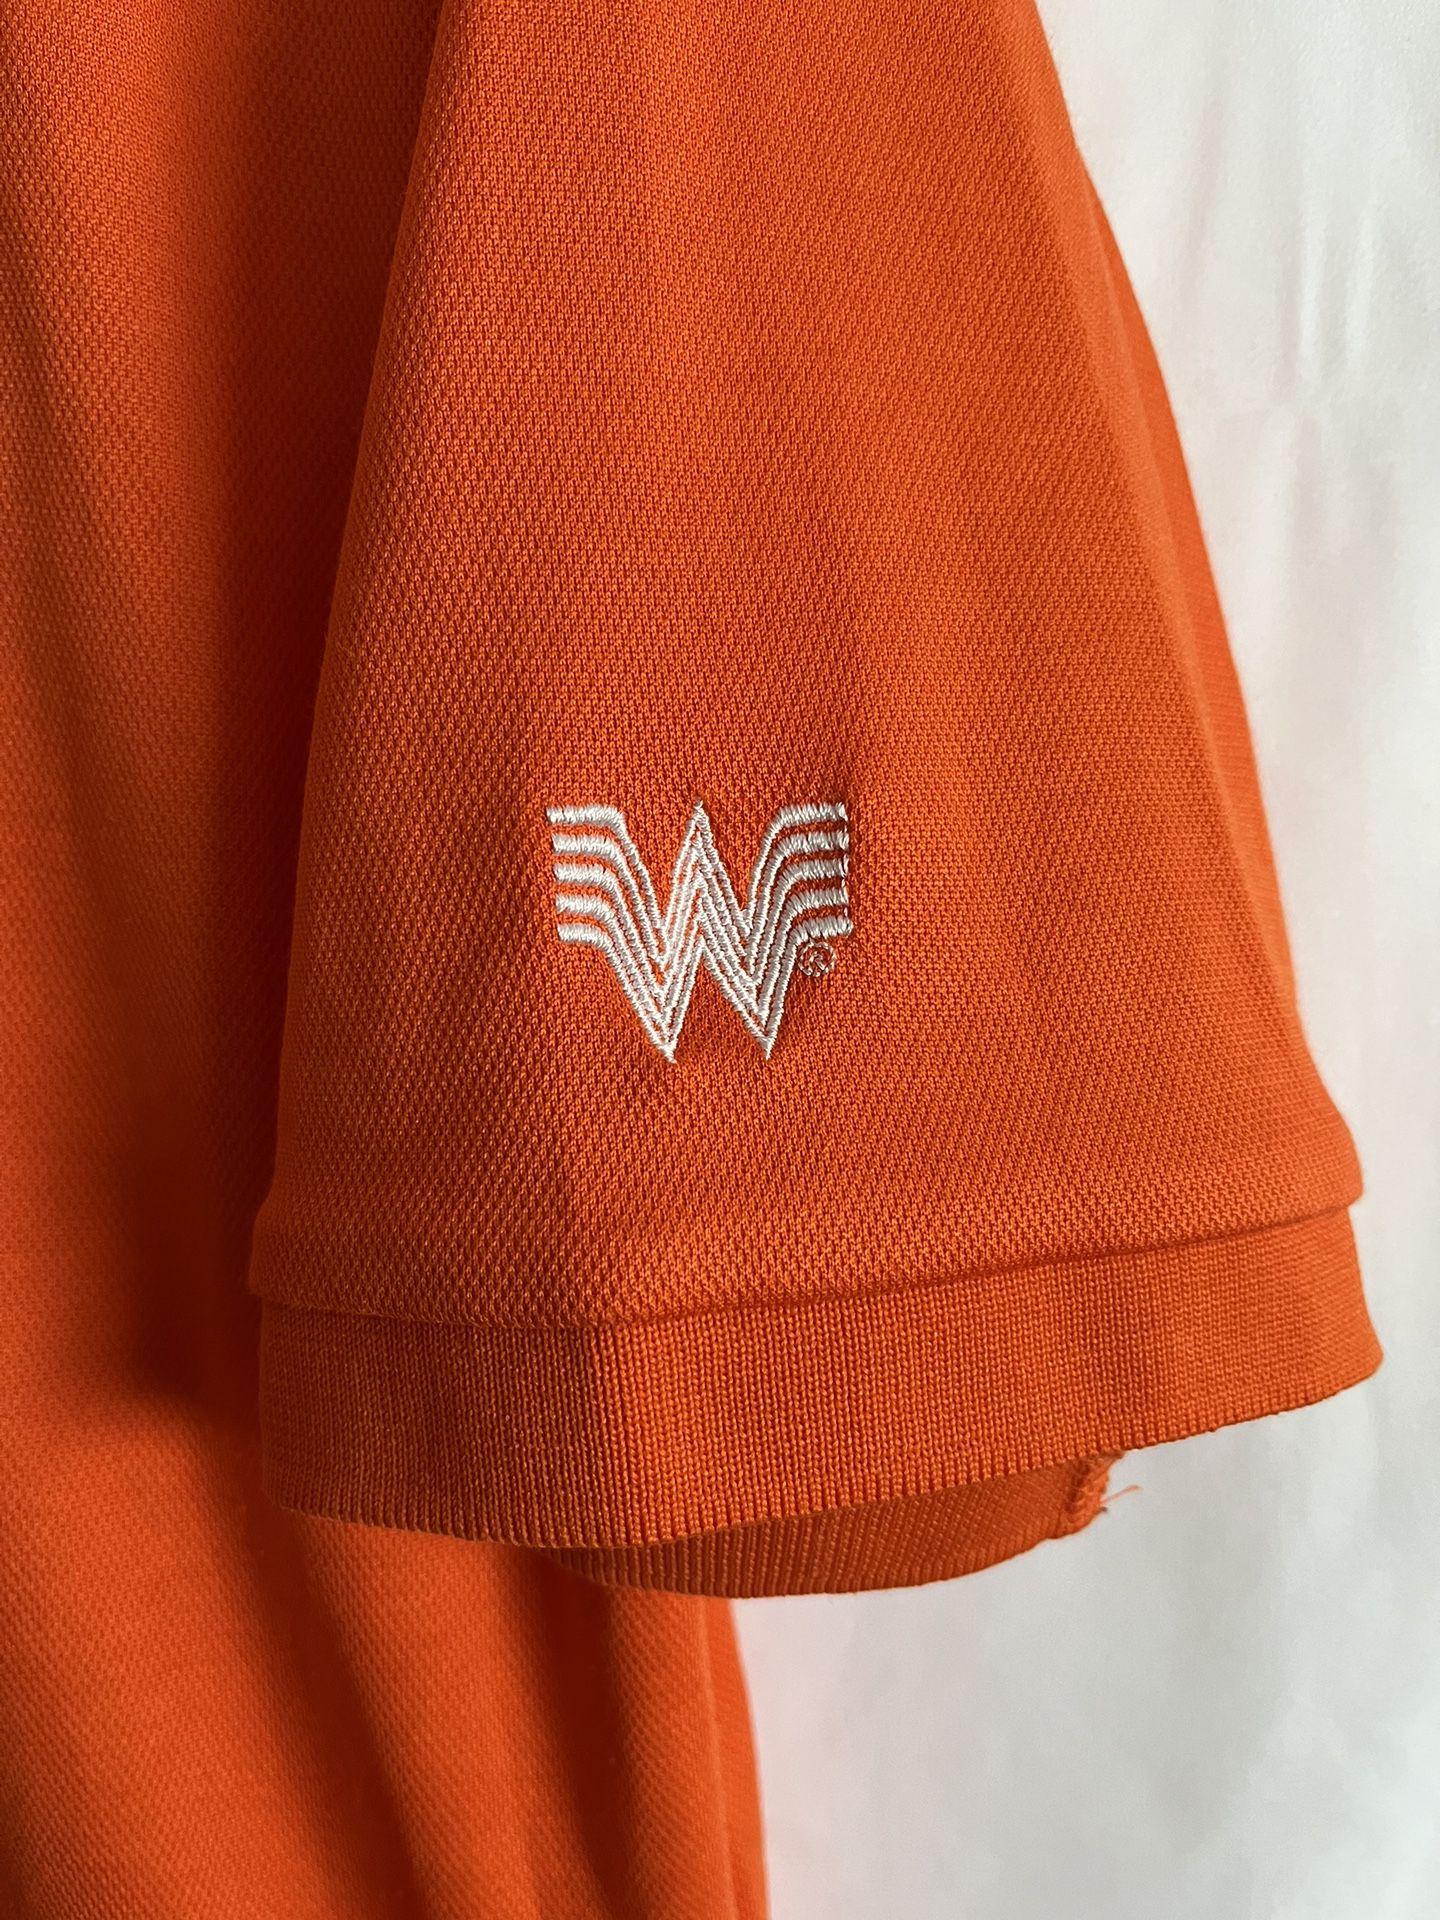 Whataburger Restaurant Employee Uniform Polo Shirt Unisex Medium Orange SS